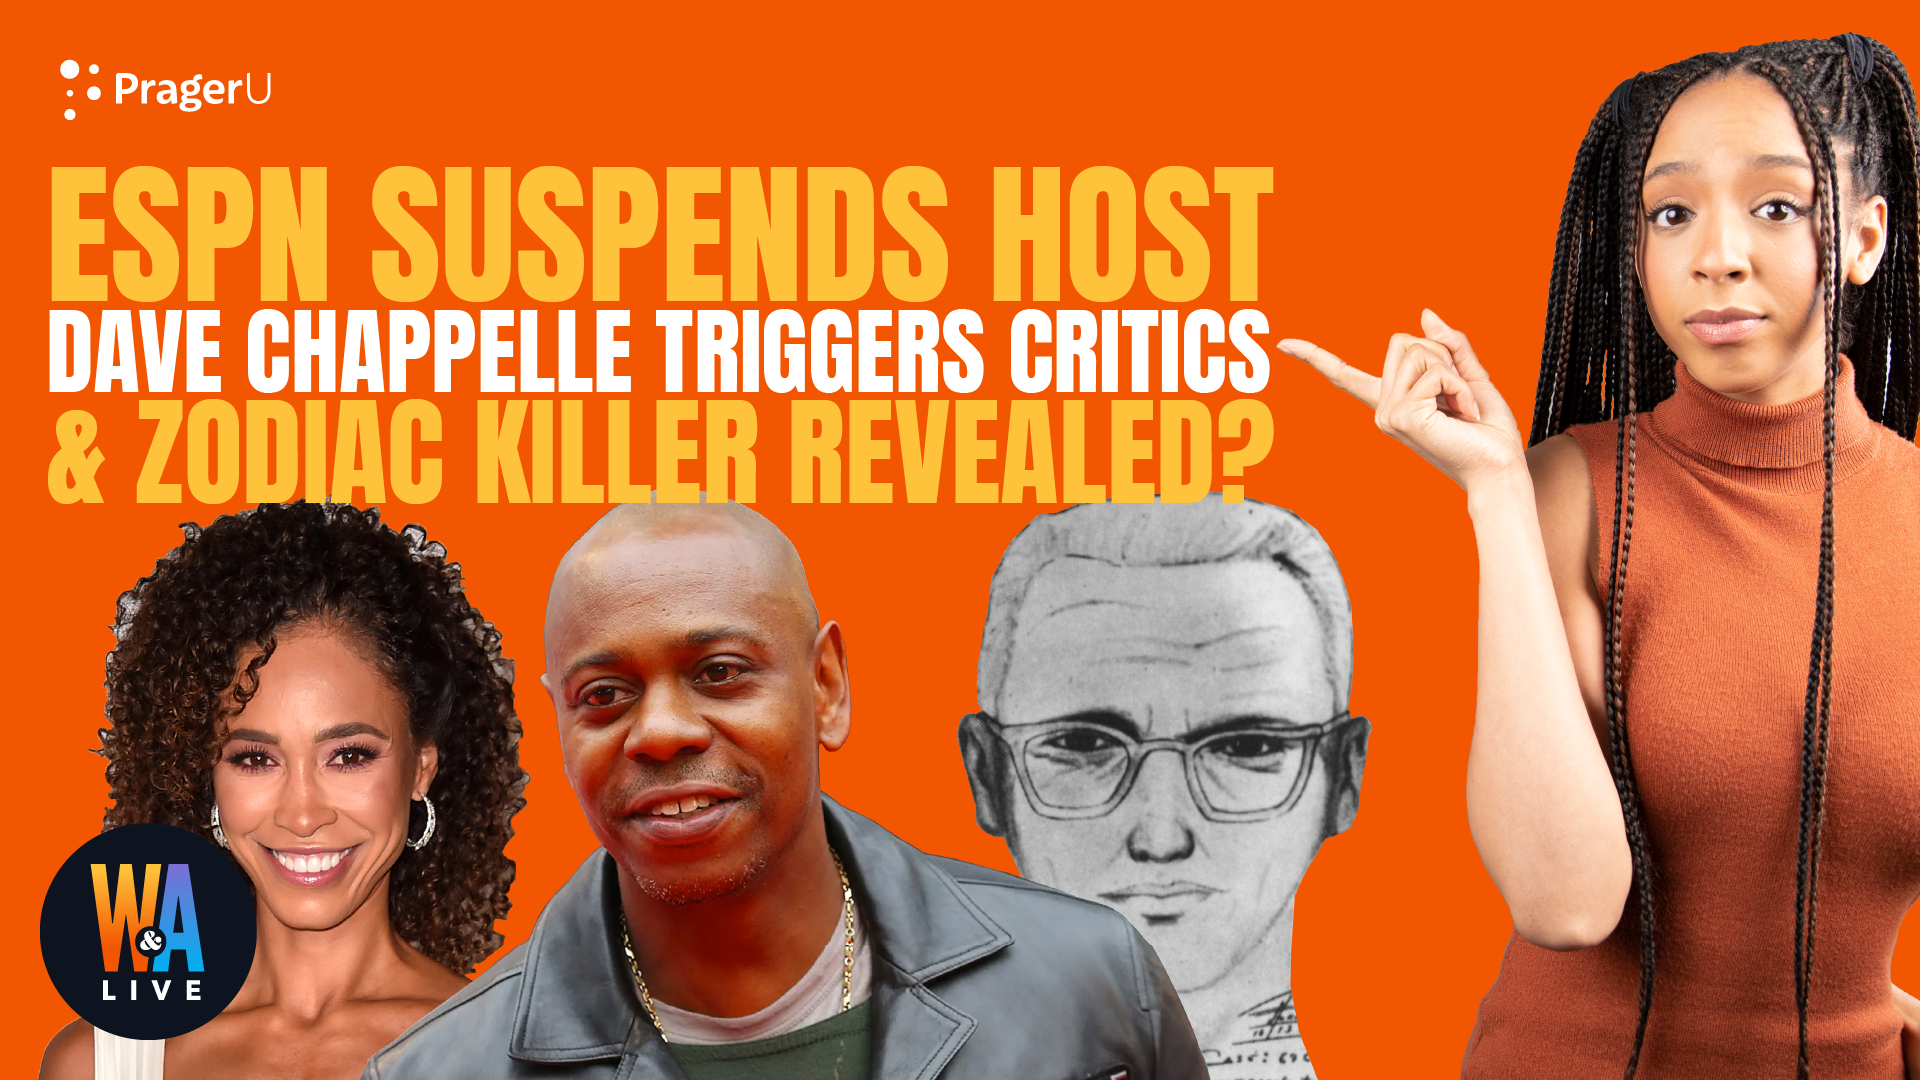 ESPN Suspends Host, Dave Chappelle Triggers Critics, & Zodiac Killer Revealed?: 10/6/2021